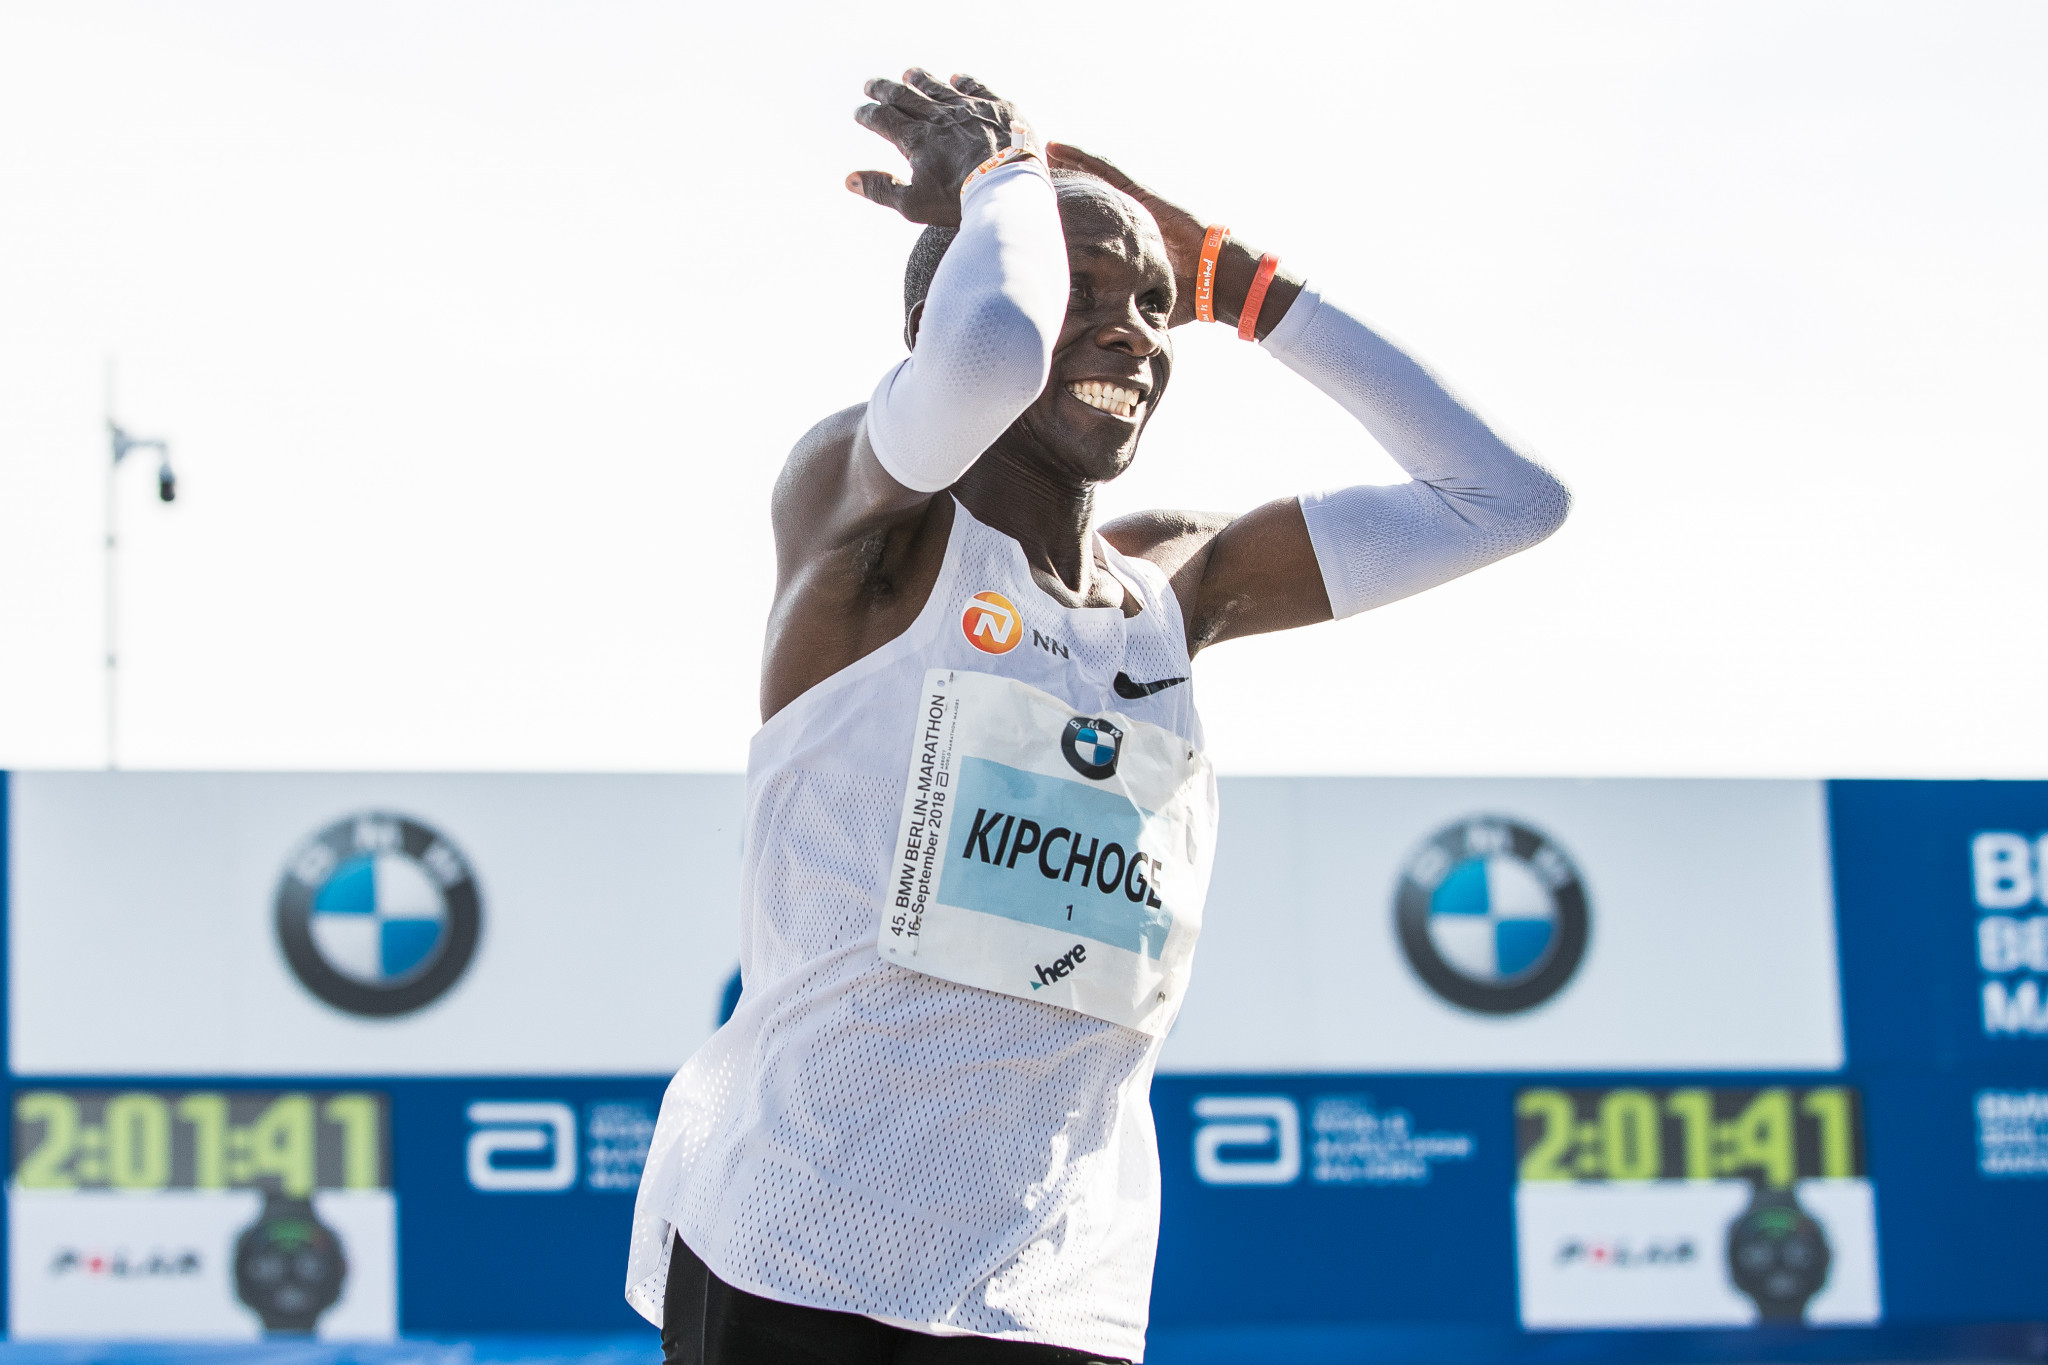 Historic day of athletics as Kipchoge smashes world marathon record and Mayer sets new decathlon mark